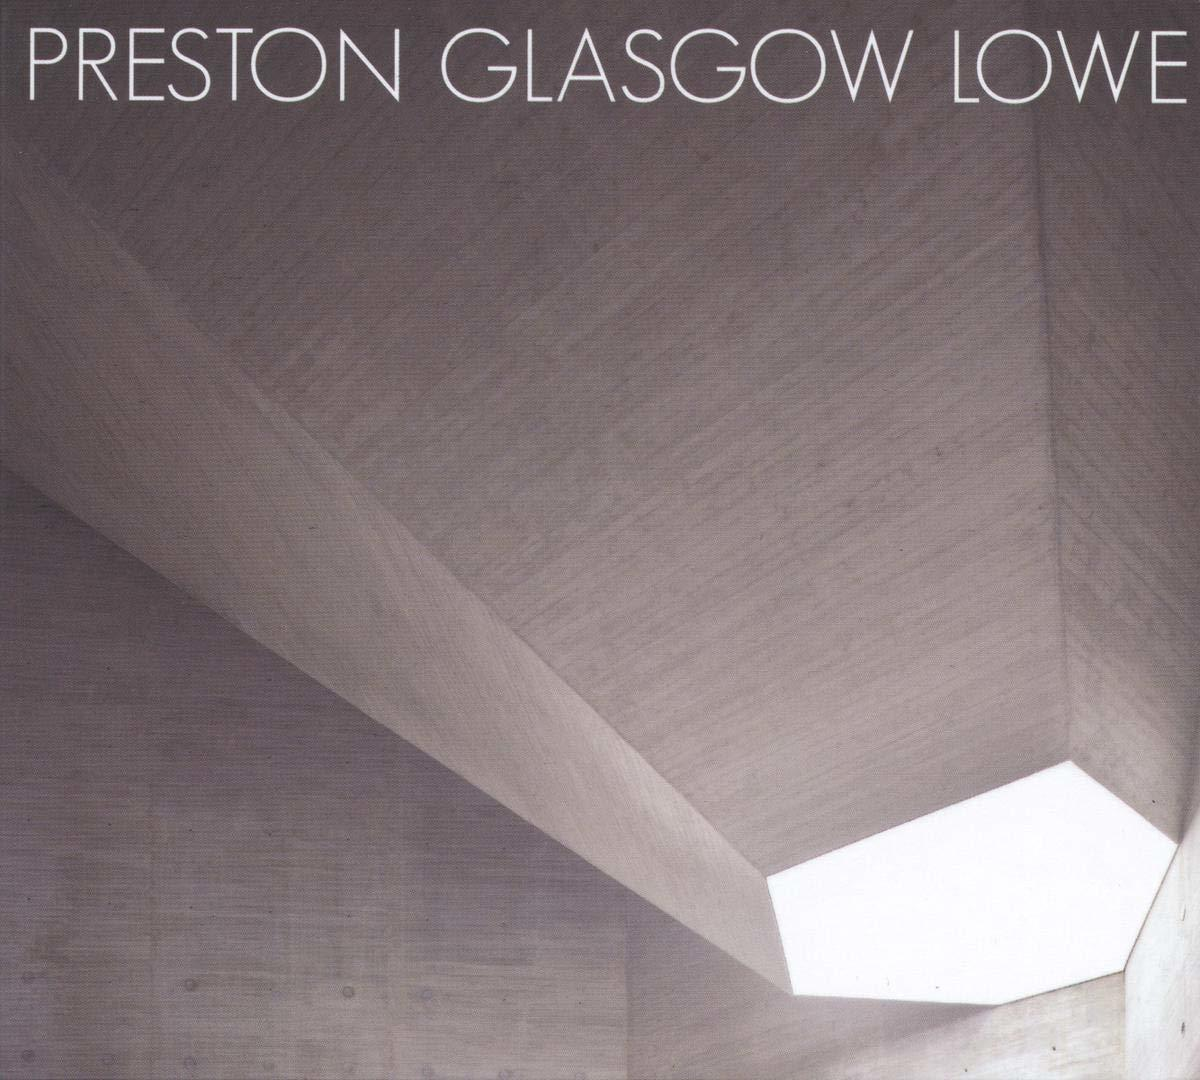 Preston - Glasgow (Vinyl) Lowe -